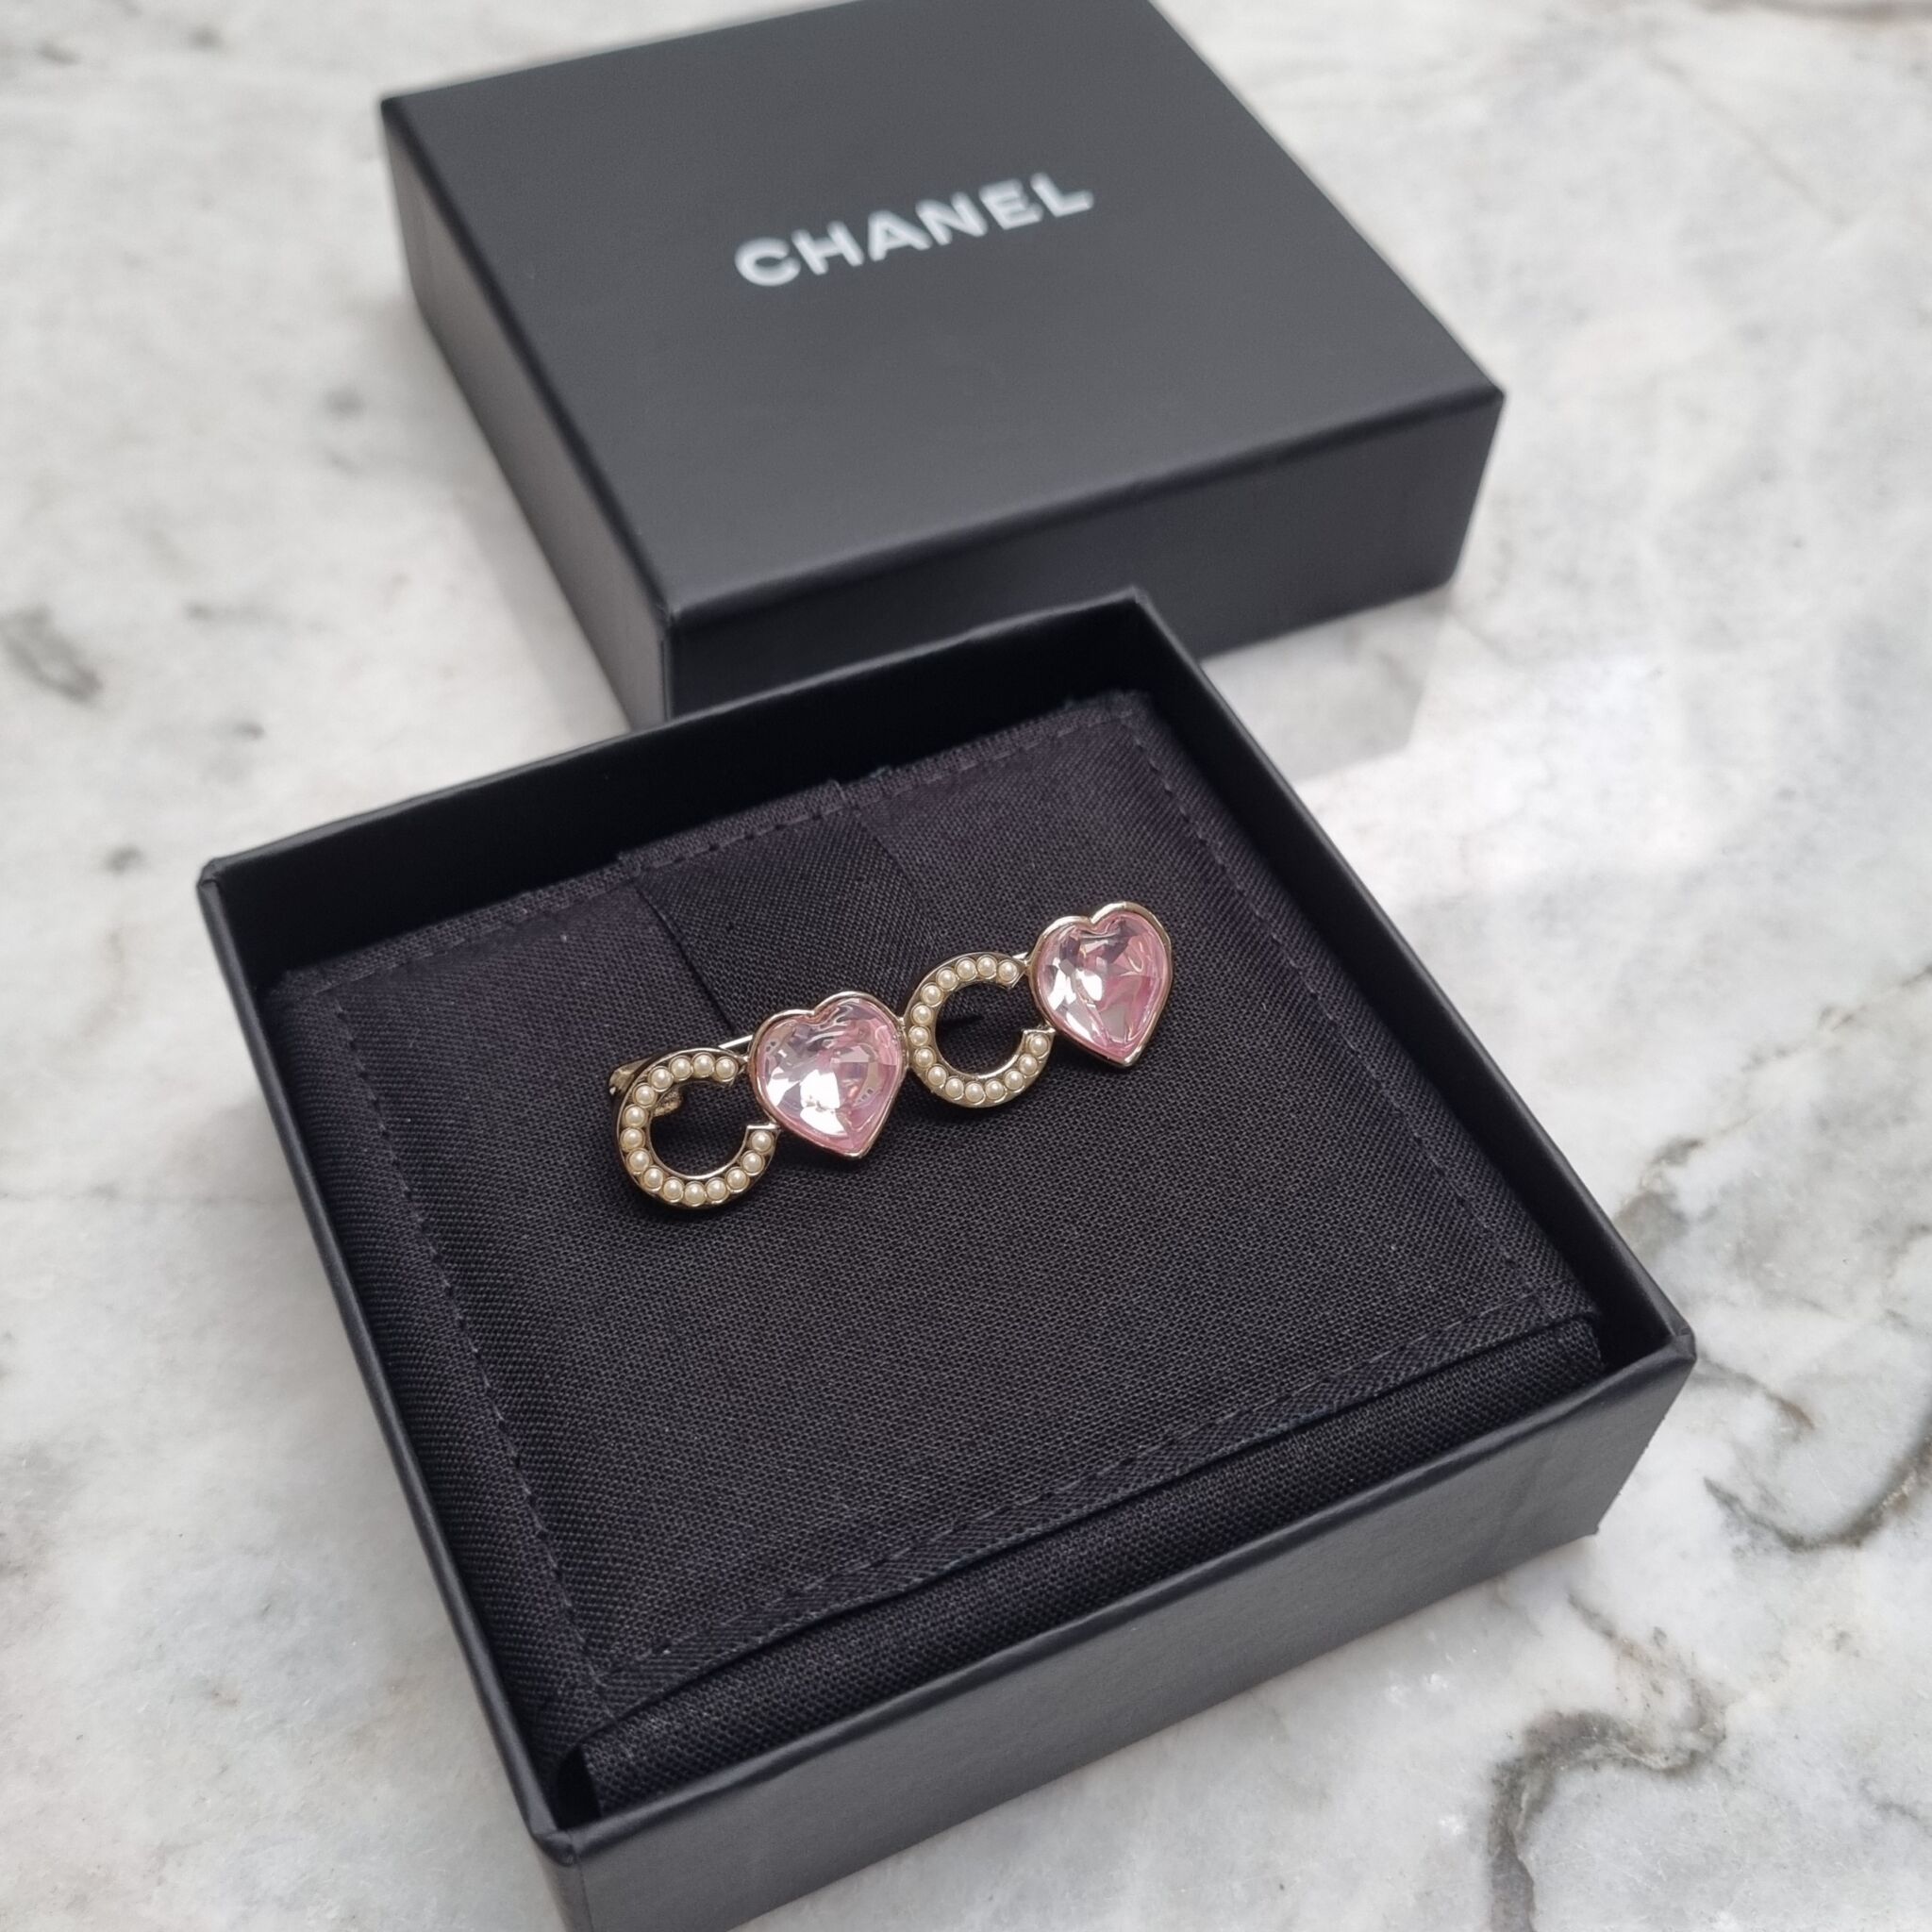 Chanel cufflinks  Coco chanel, Accessories, Chanel